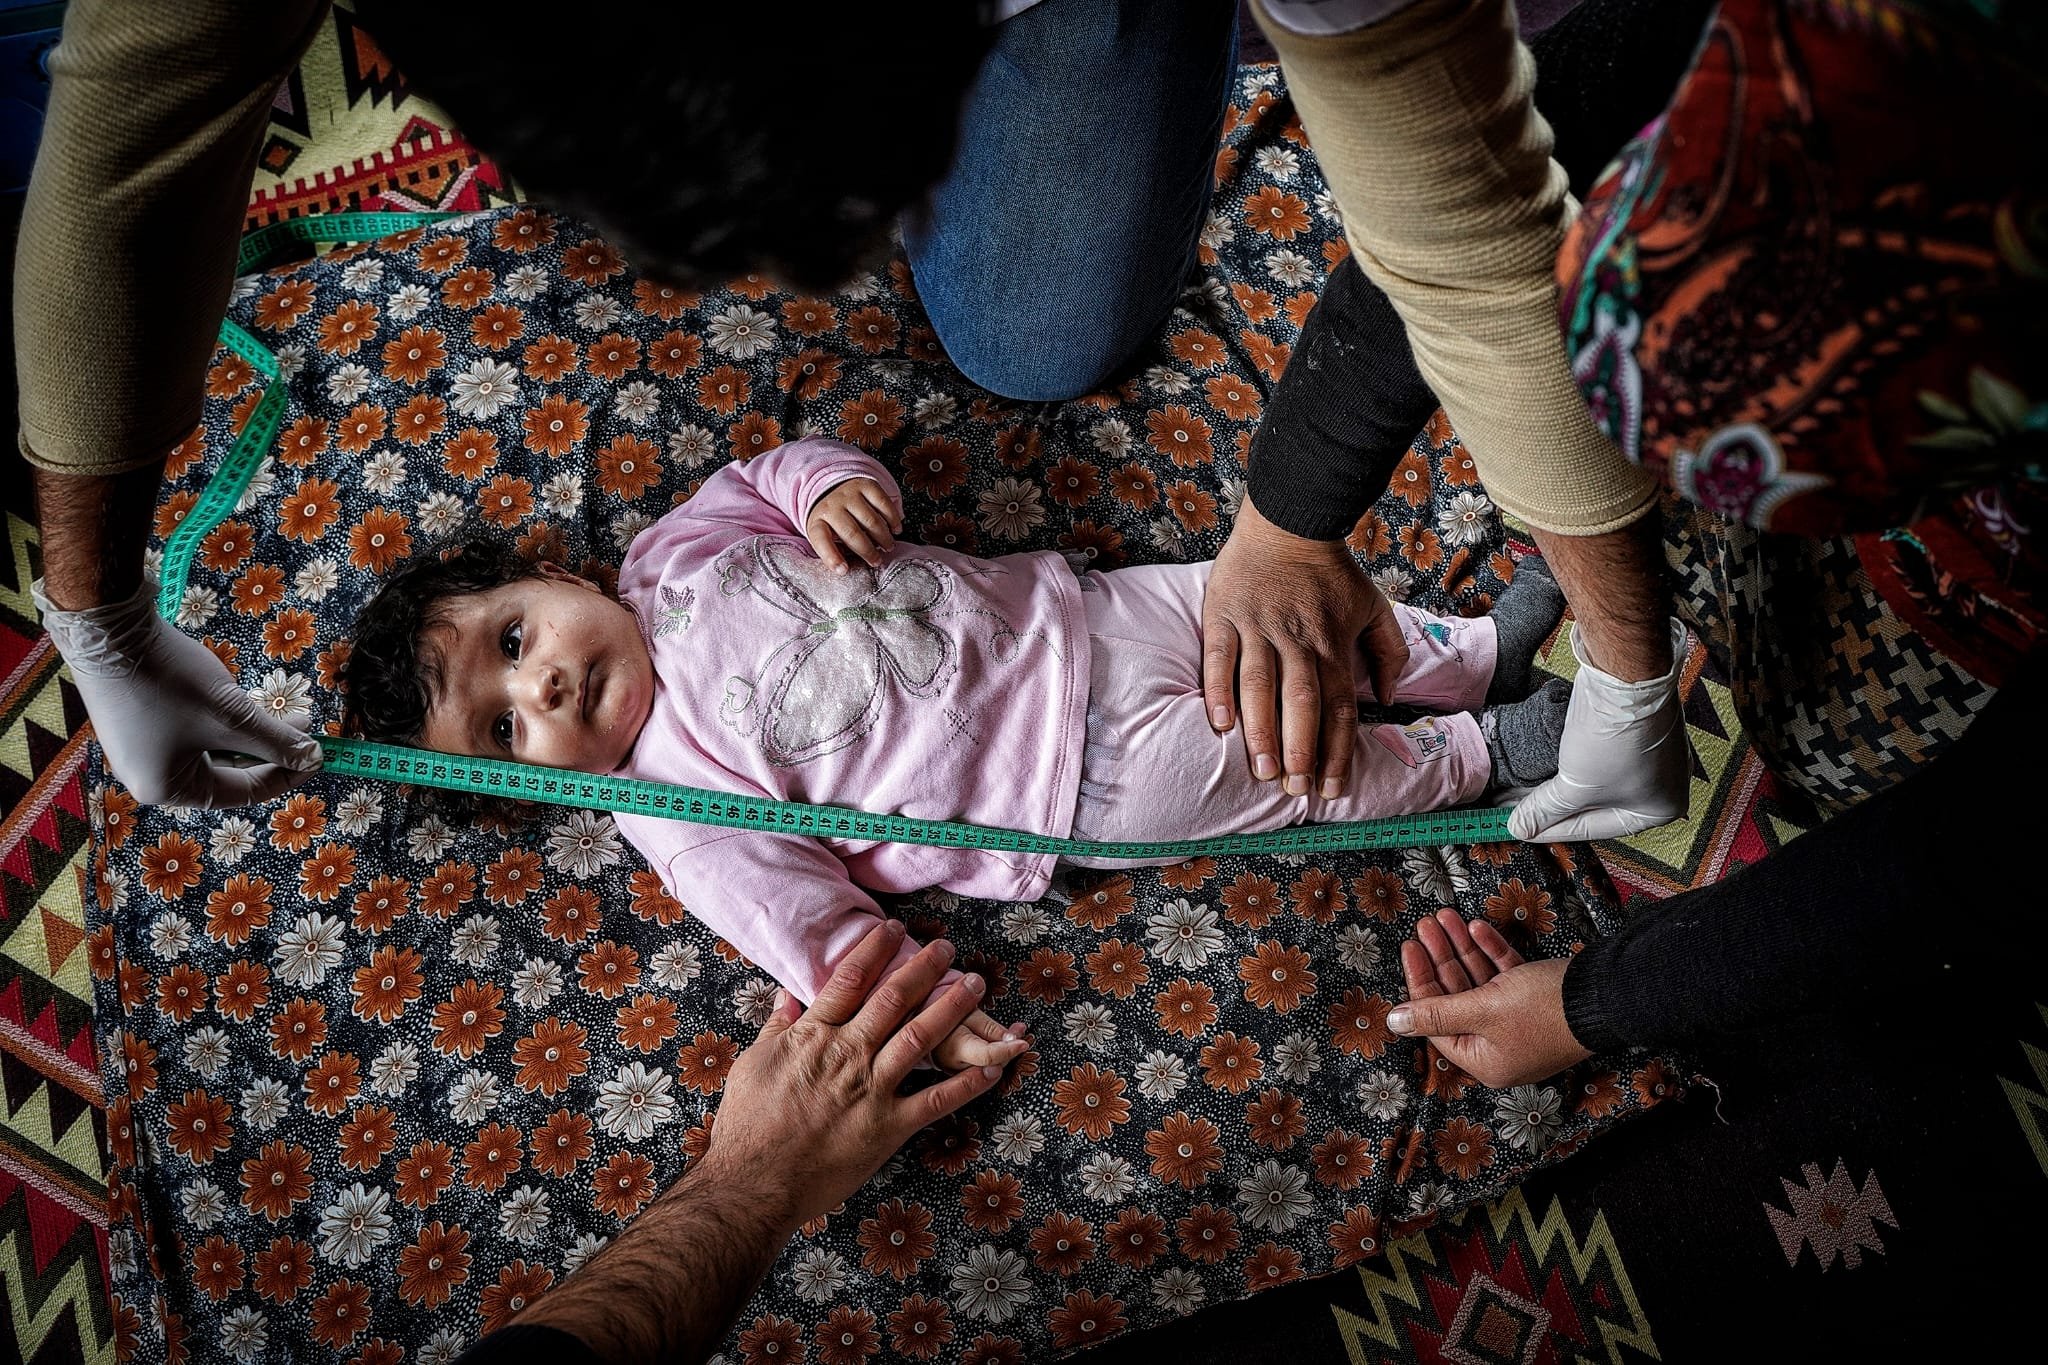 Health care workers measure the height of an infant in a village, in Bitlis, eastern Türkiye, Nov. 20, 2022. (Photo by Uğur Yıldrım)